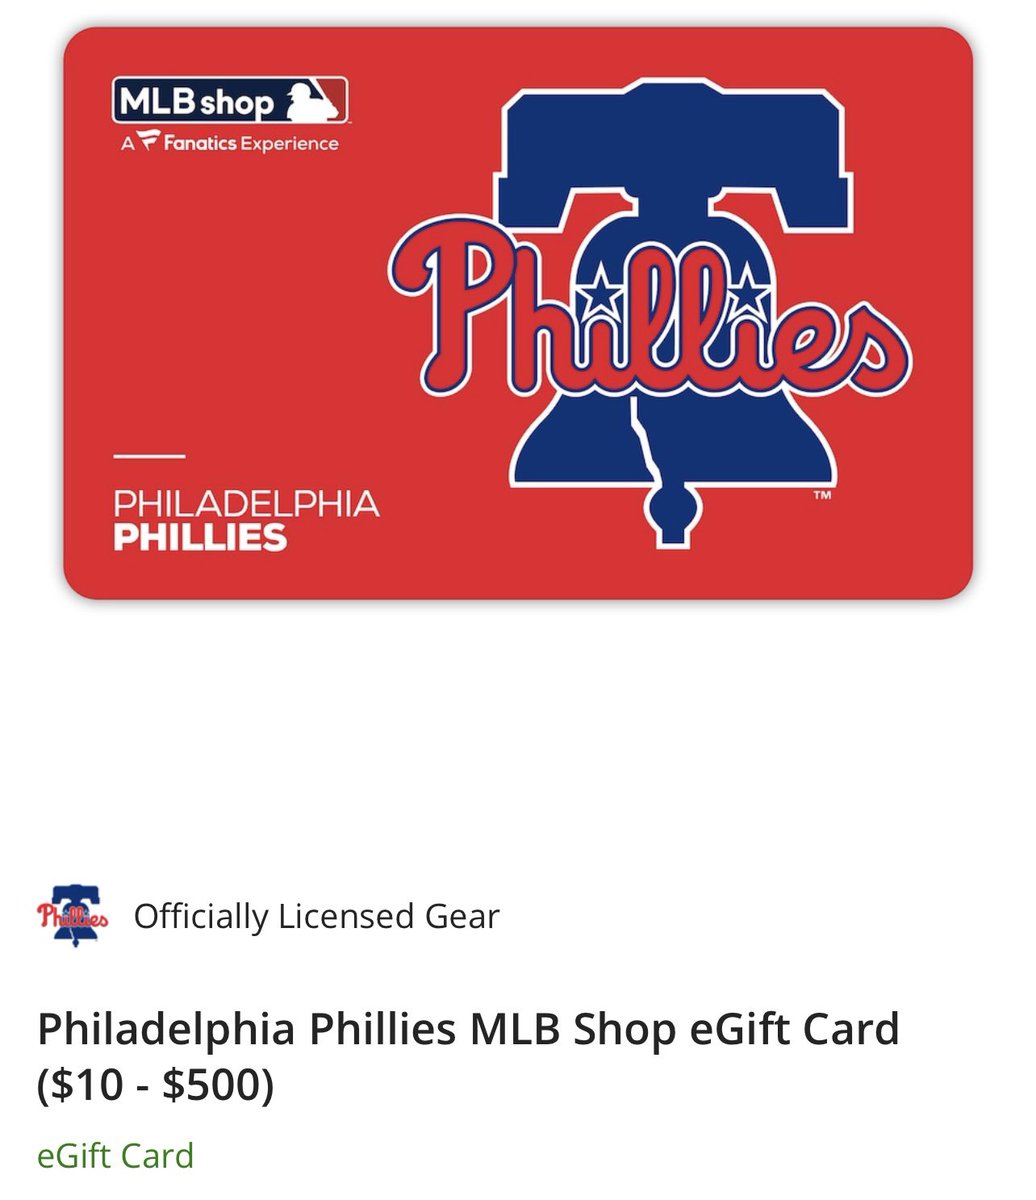 MLB Shop eGift Card ($10 - $500)